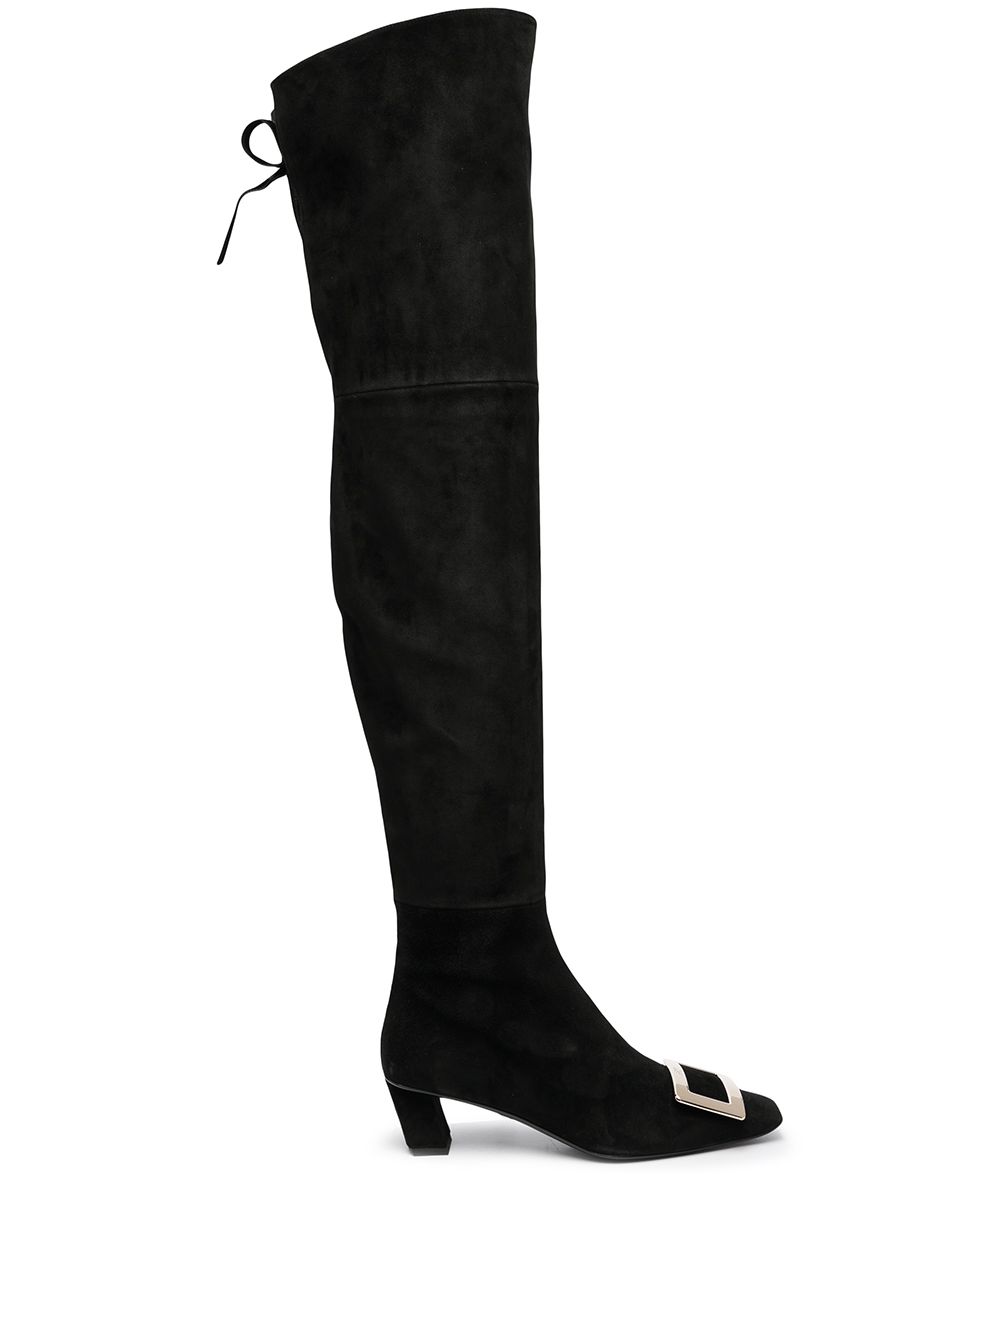 Belle Vivier Leather Boots дамски обувки Roger Vivier 846579068_37